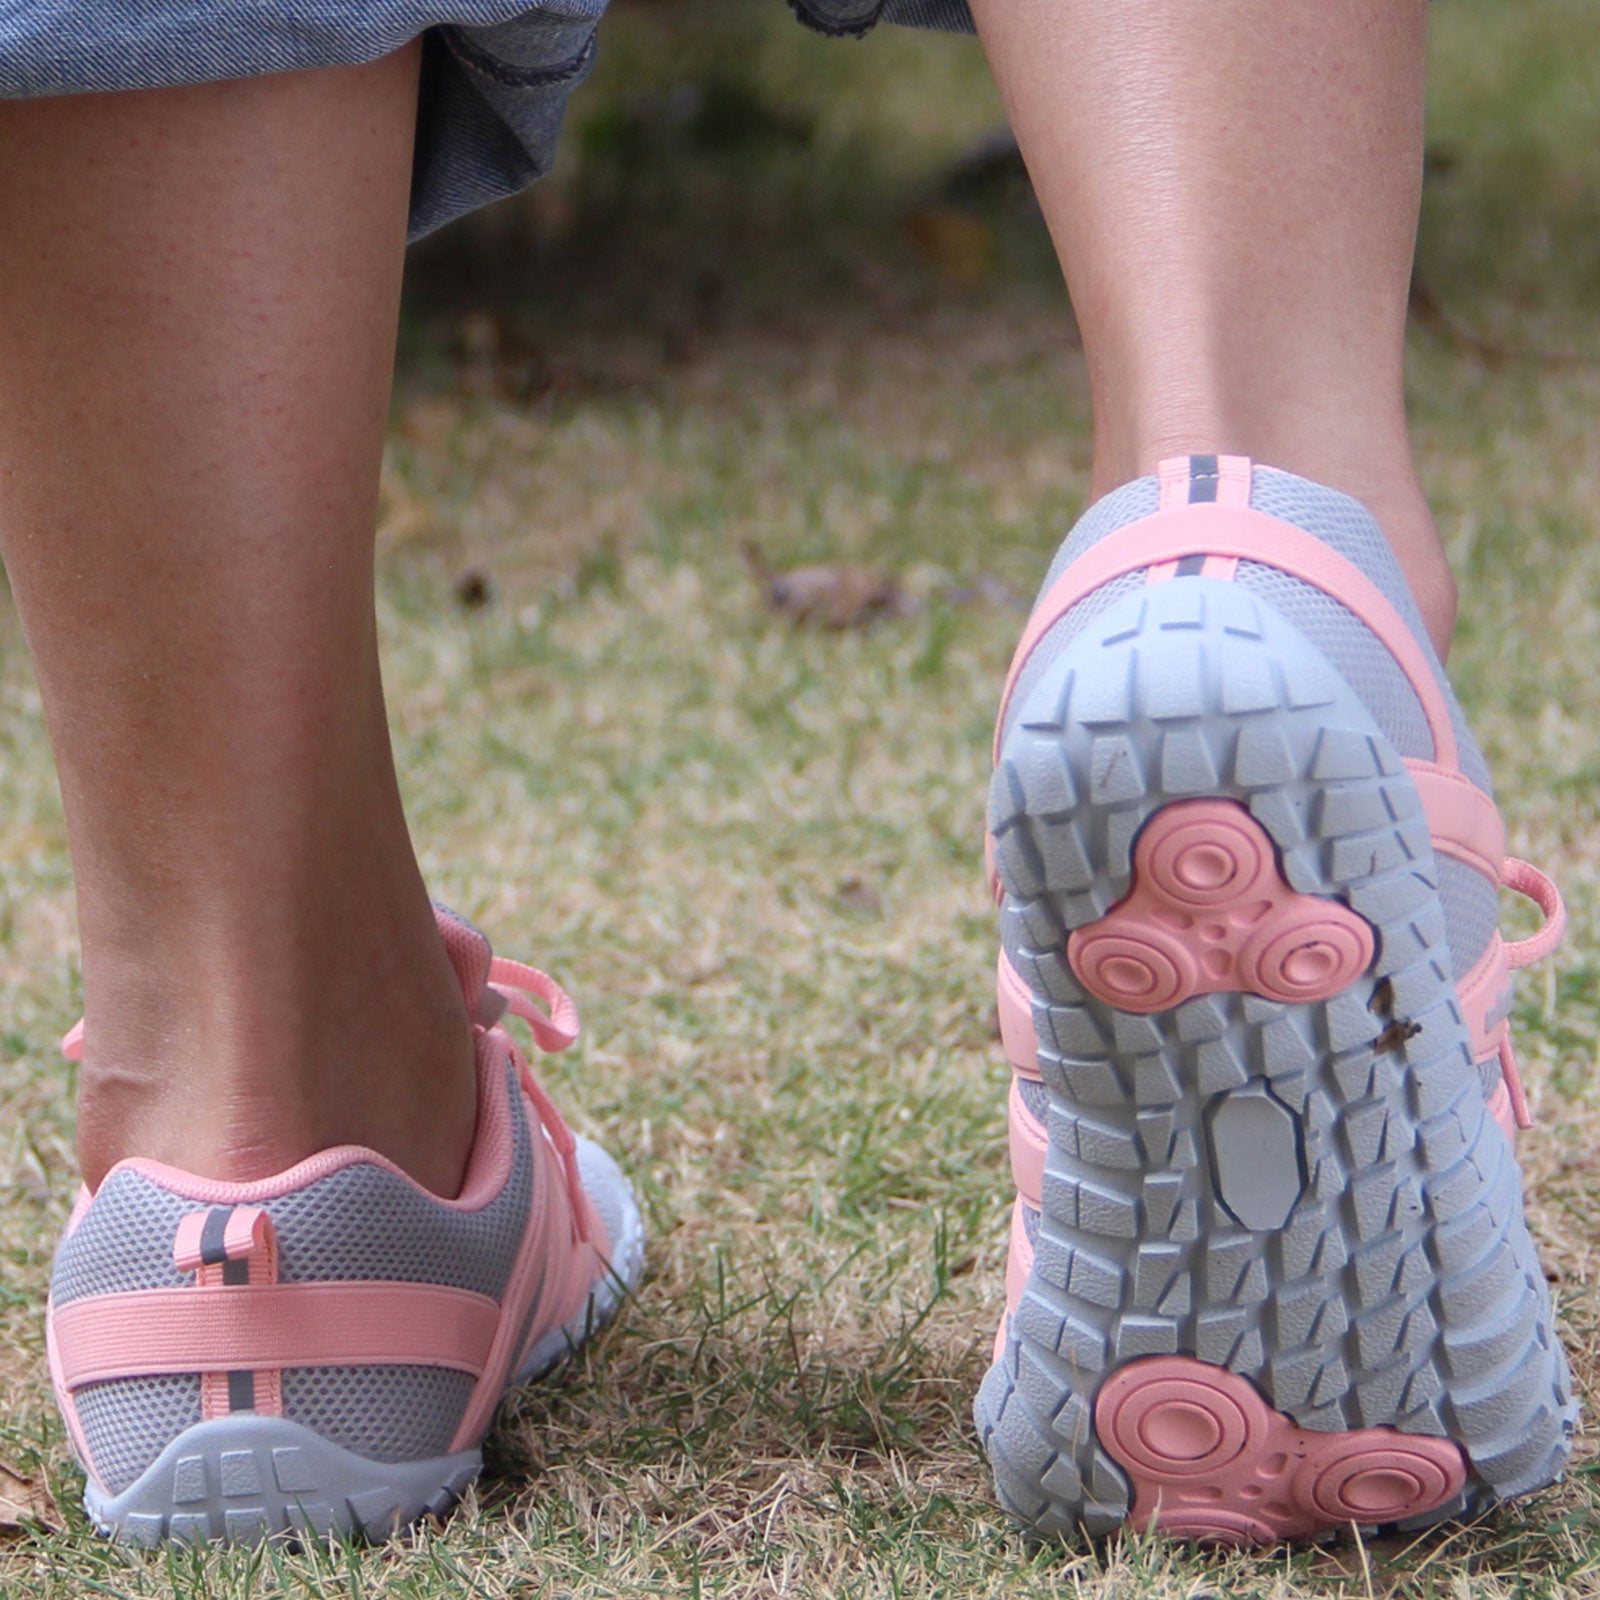 barefoot running shoes for women